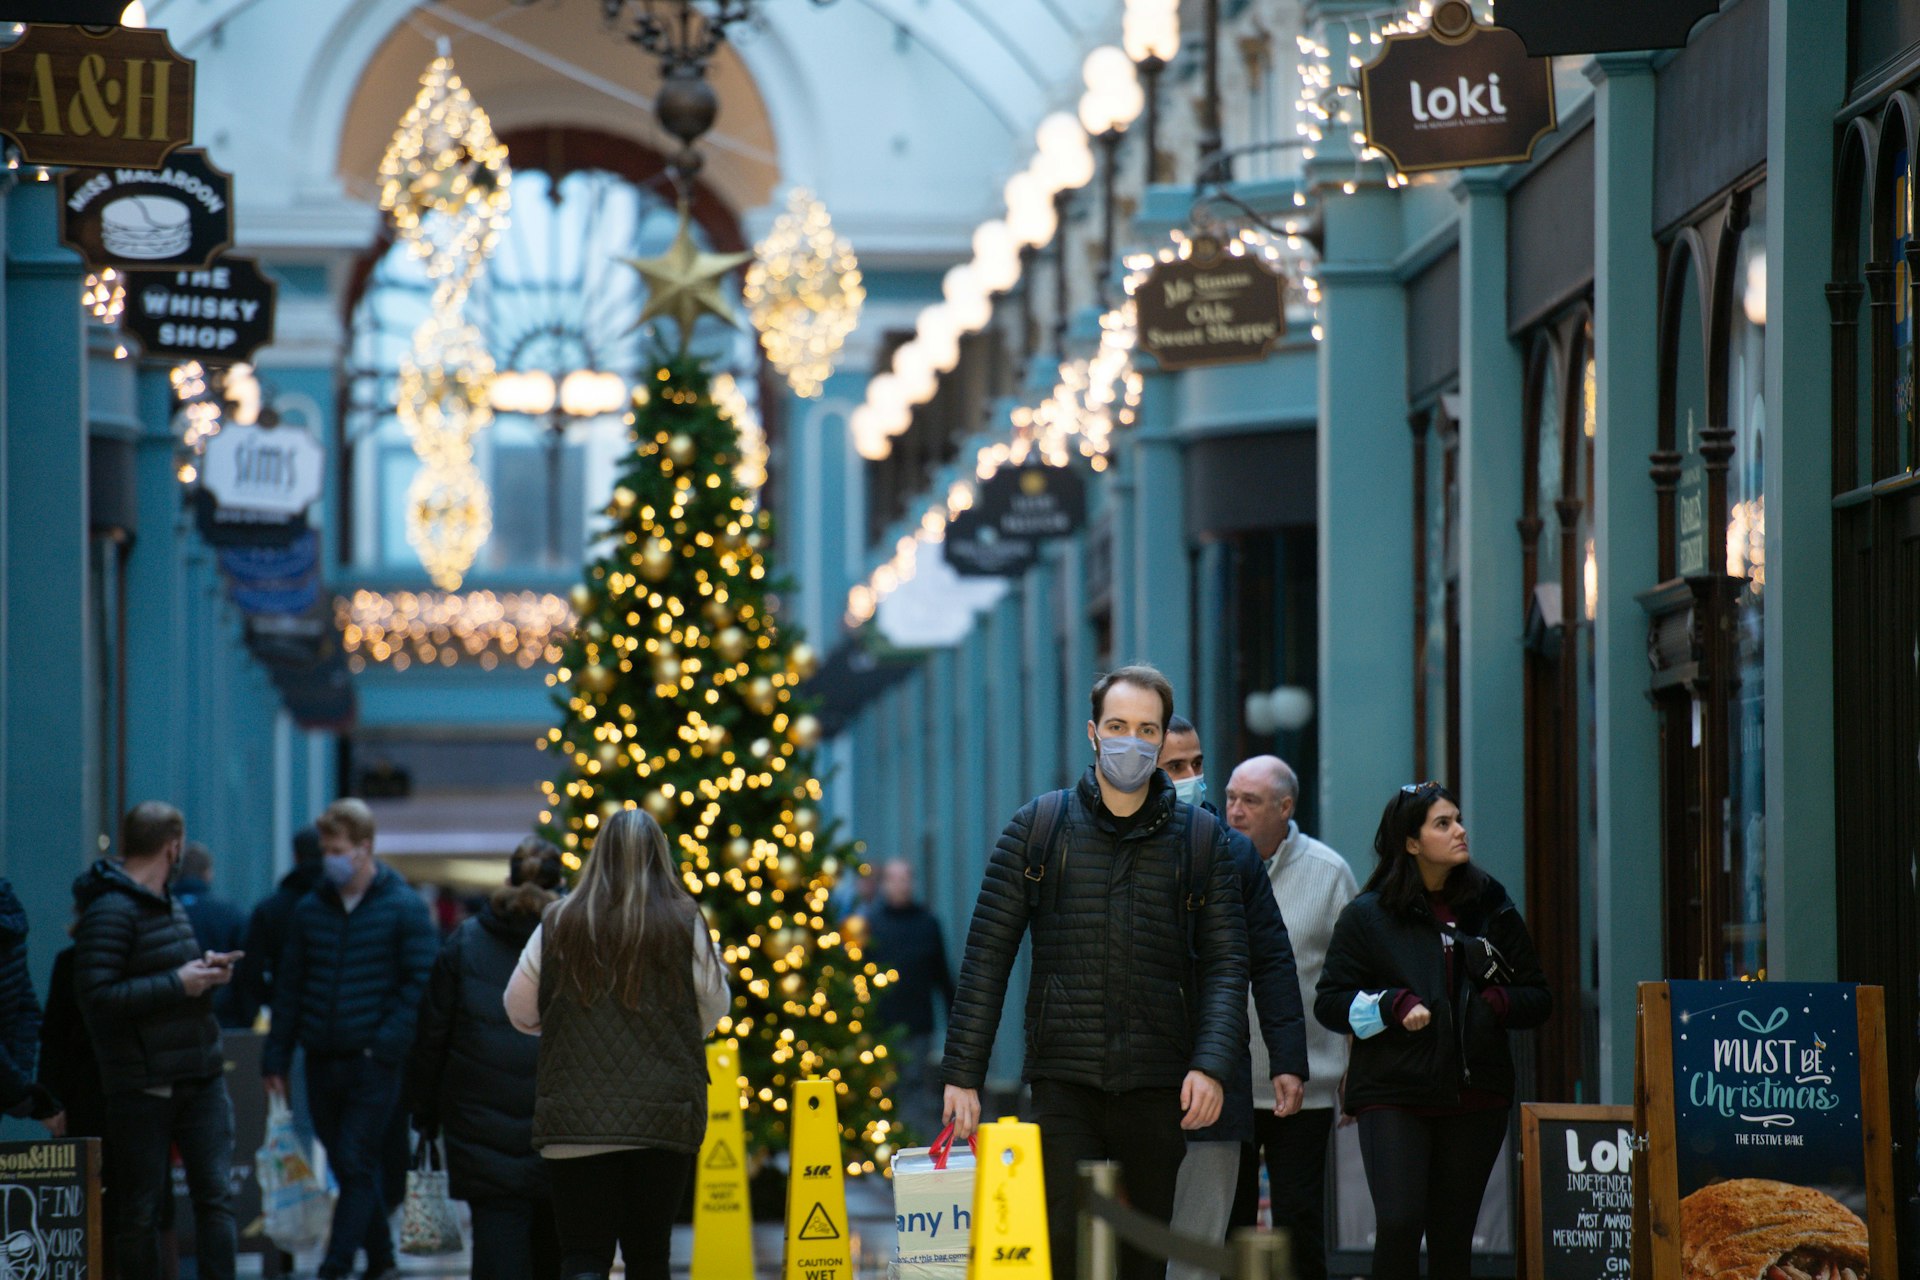 Christmas shoppers stroll through the historic Great Western Arcade in Birmingham, England